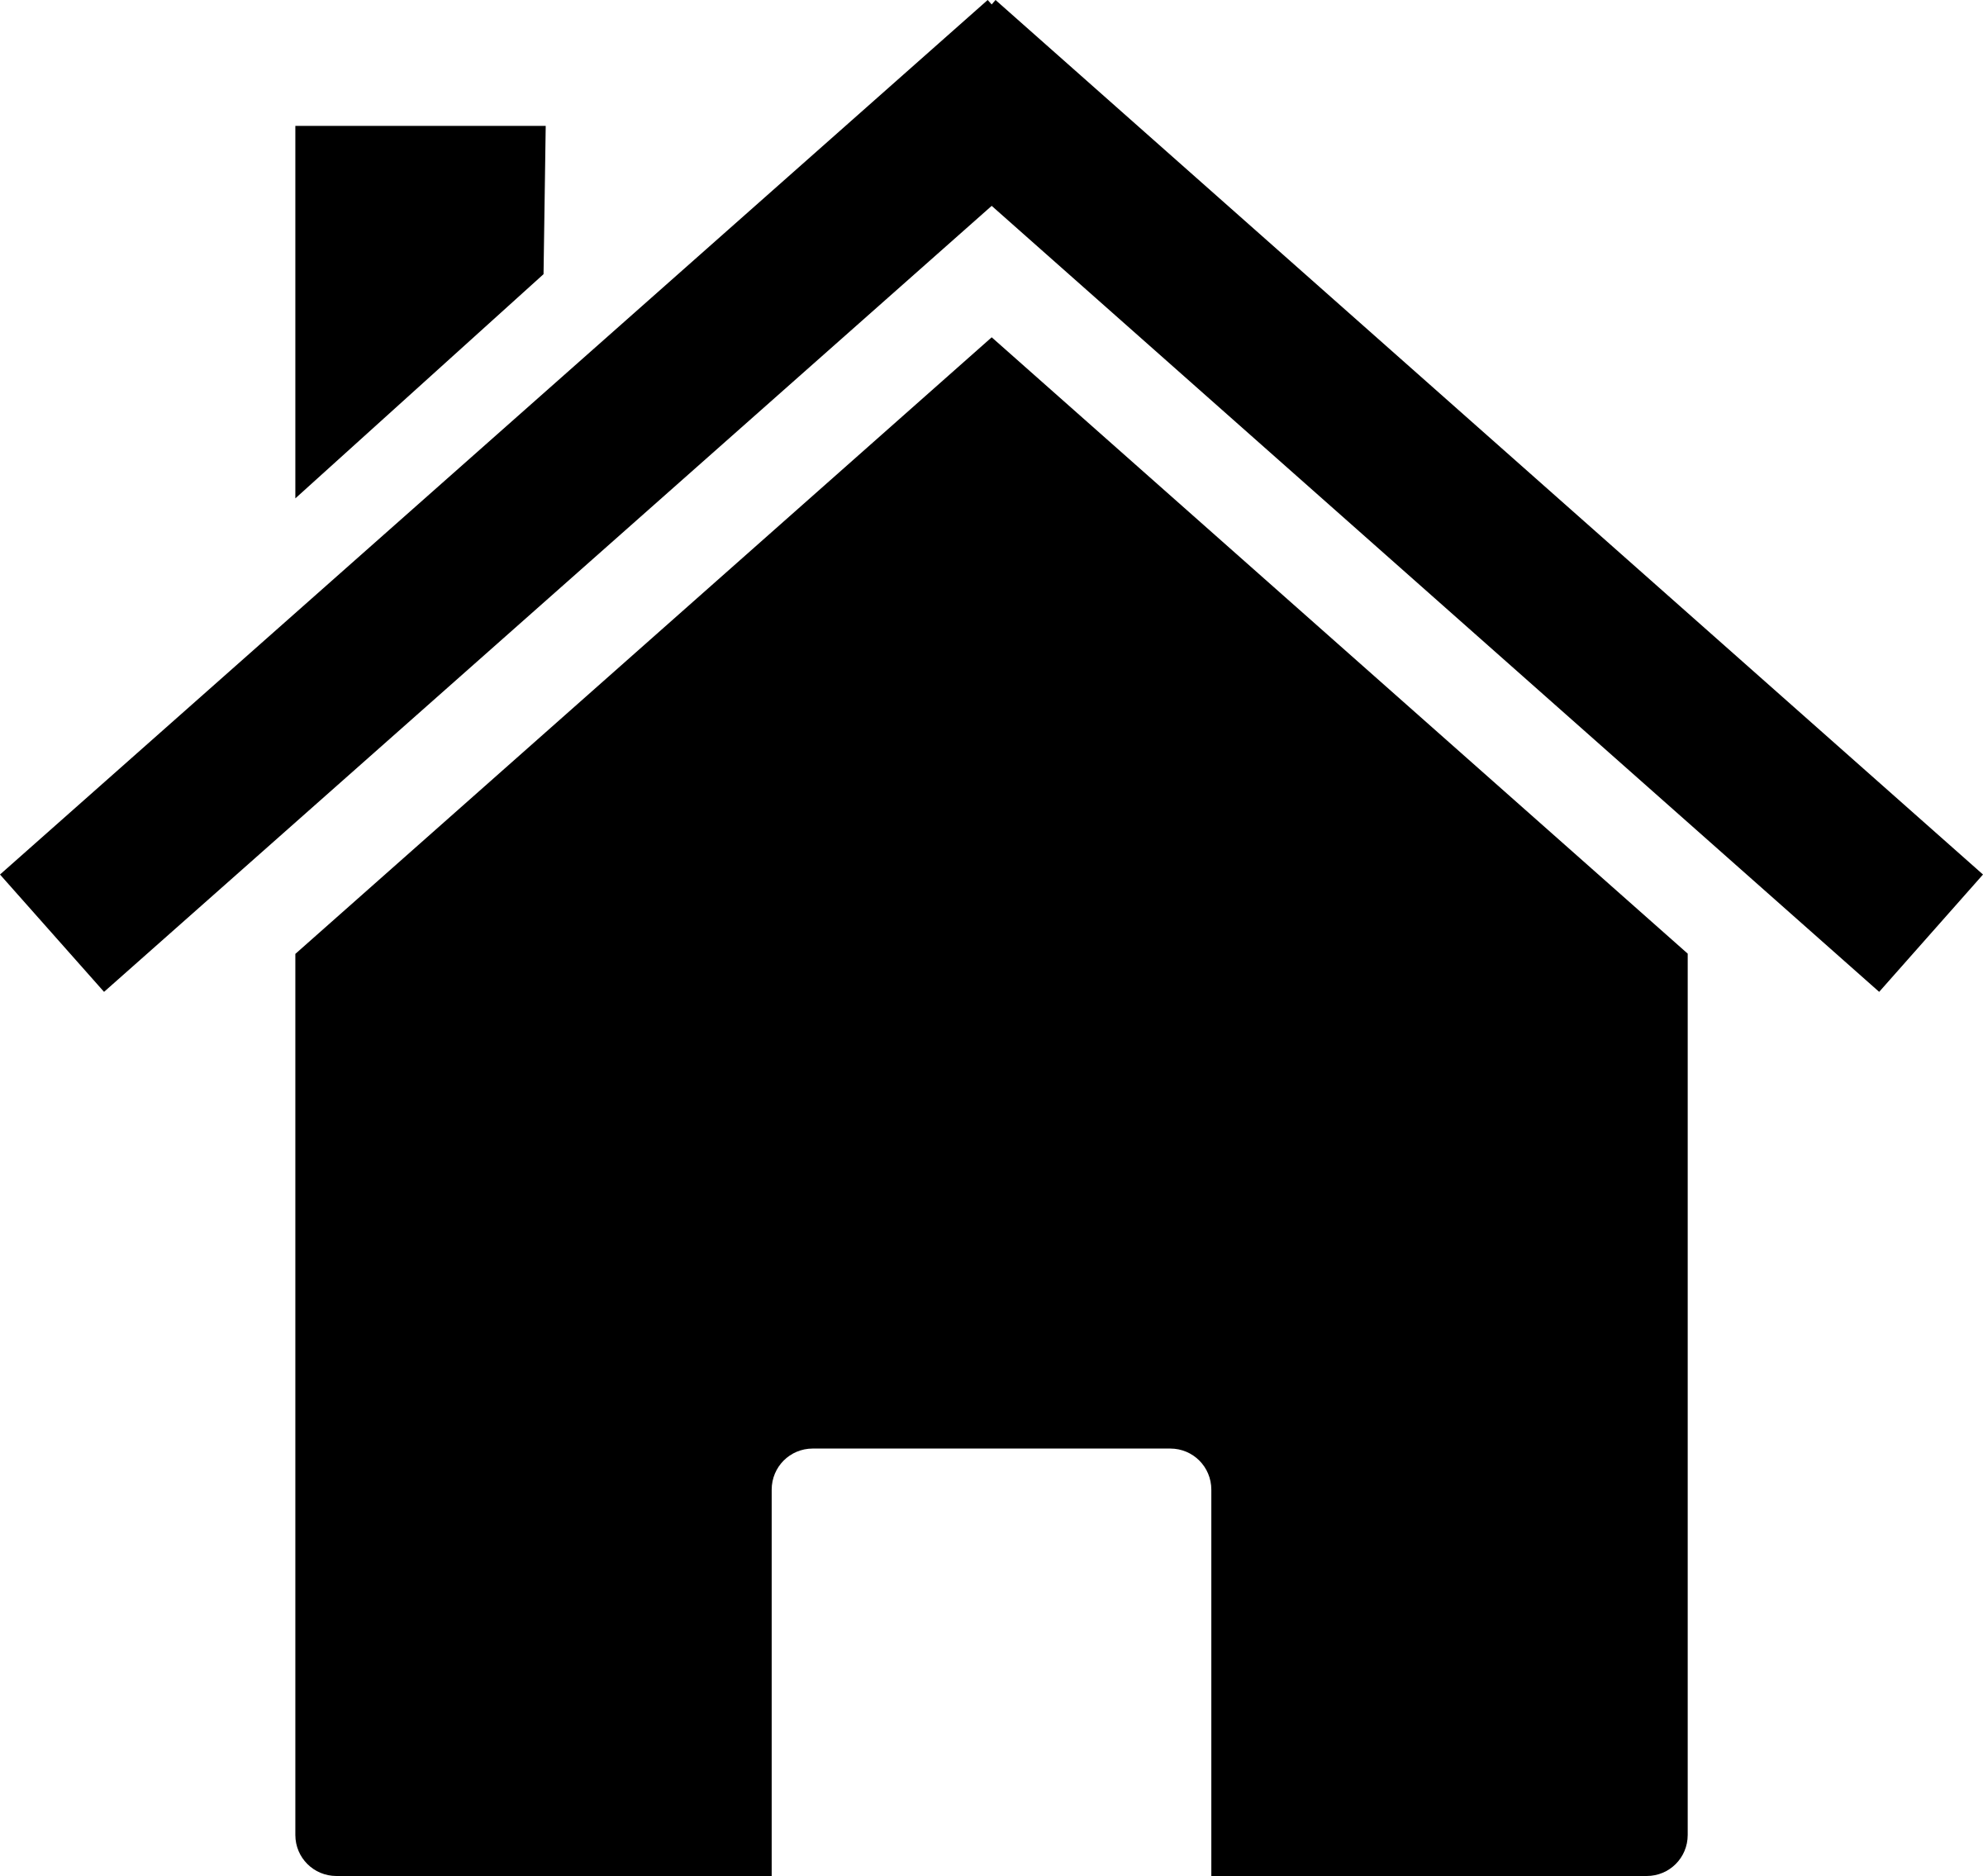 House Transparent Logo - Home Icons transparent PNG images - StickPNG